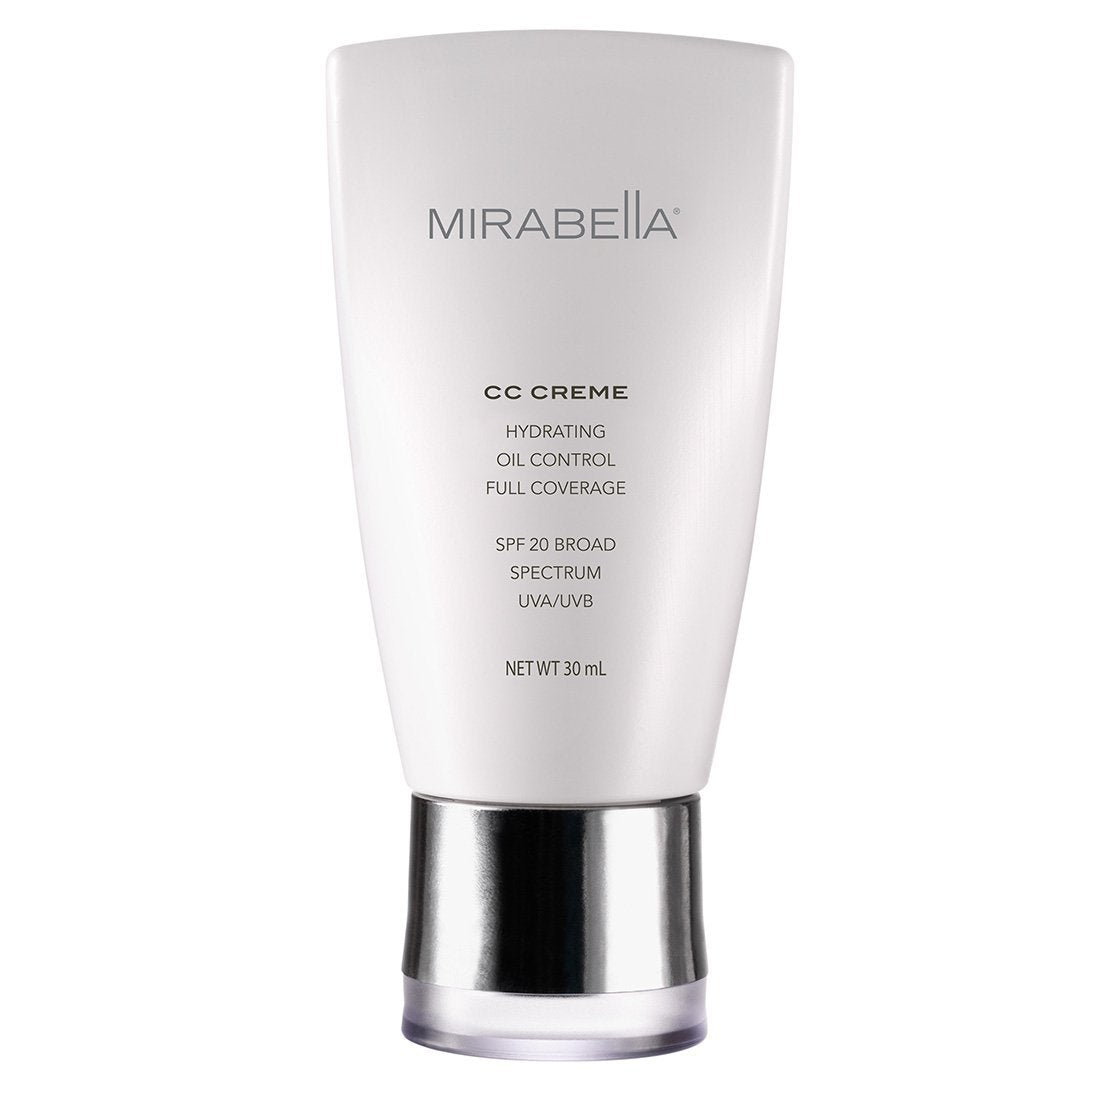 Mirabella CC Creme, Light II - ADDROS.COM